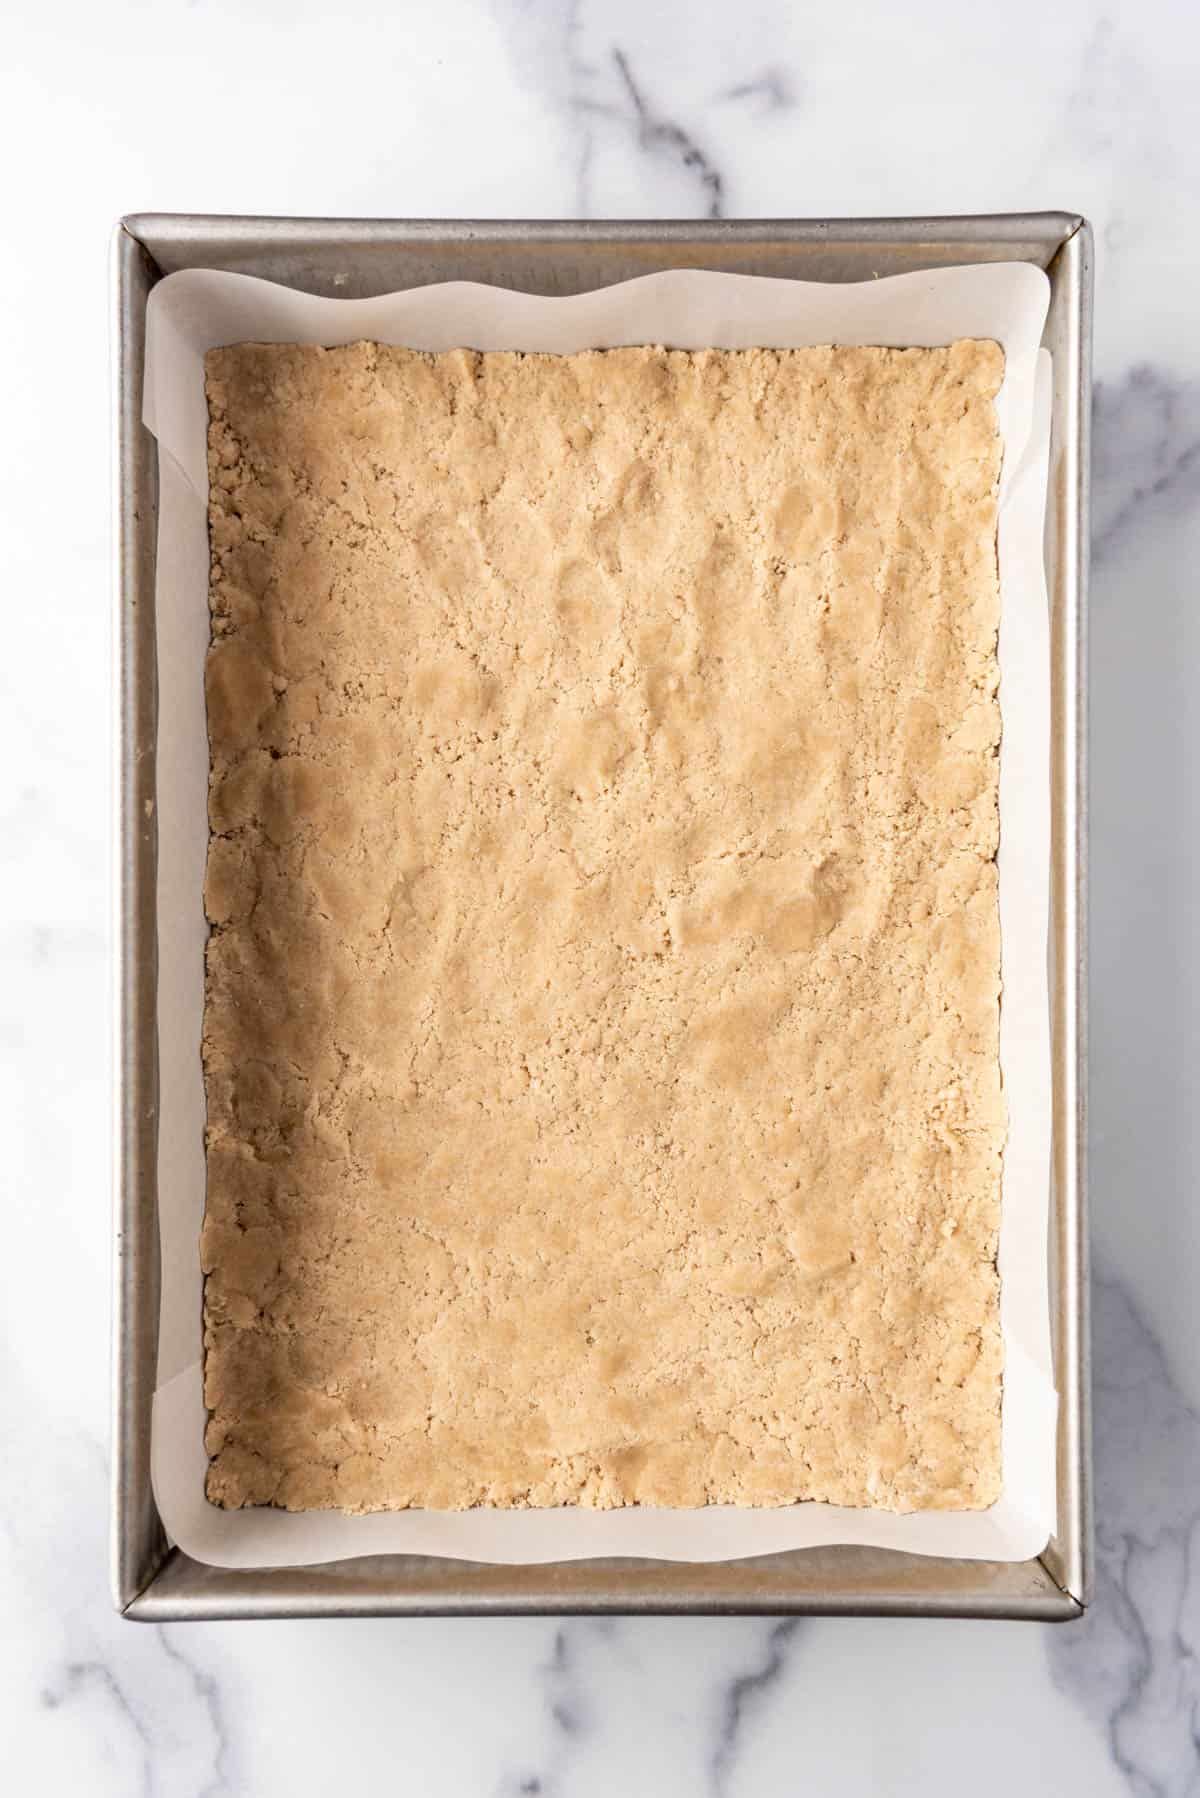 Pressing shortbread crust into a rectangular baking pan.